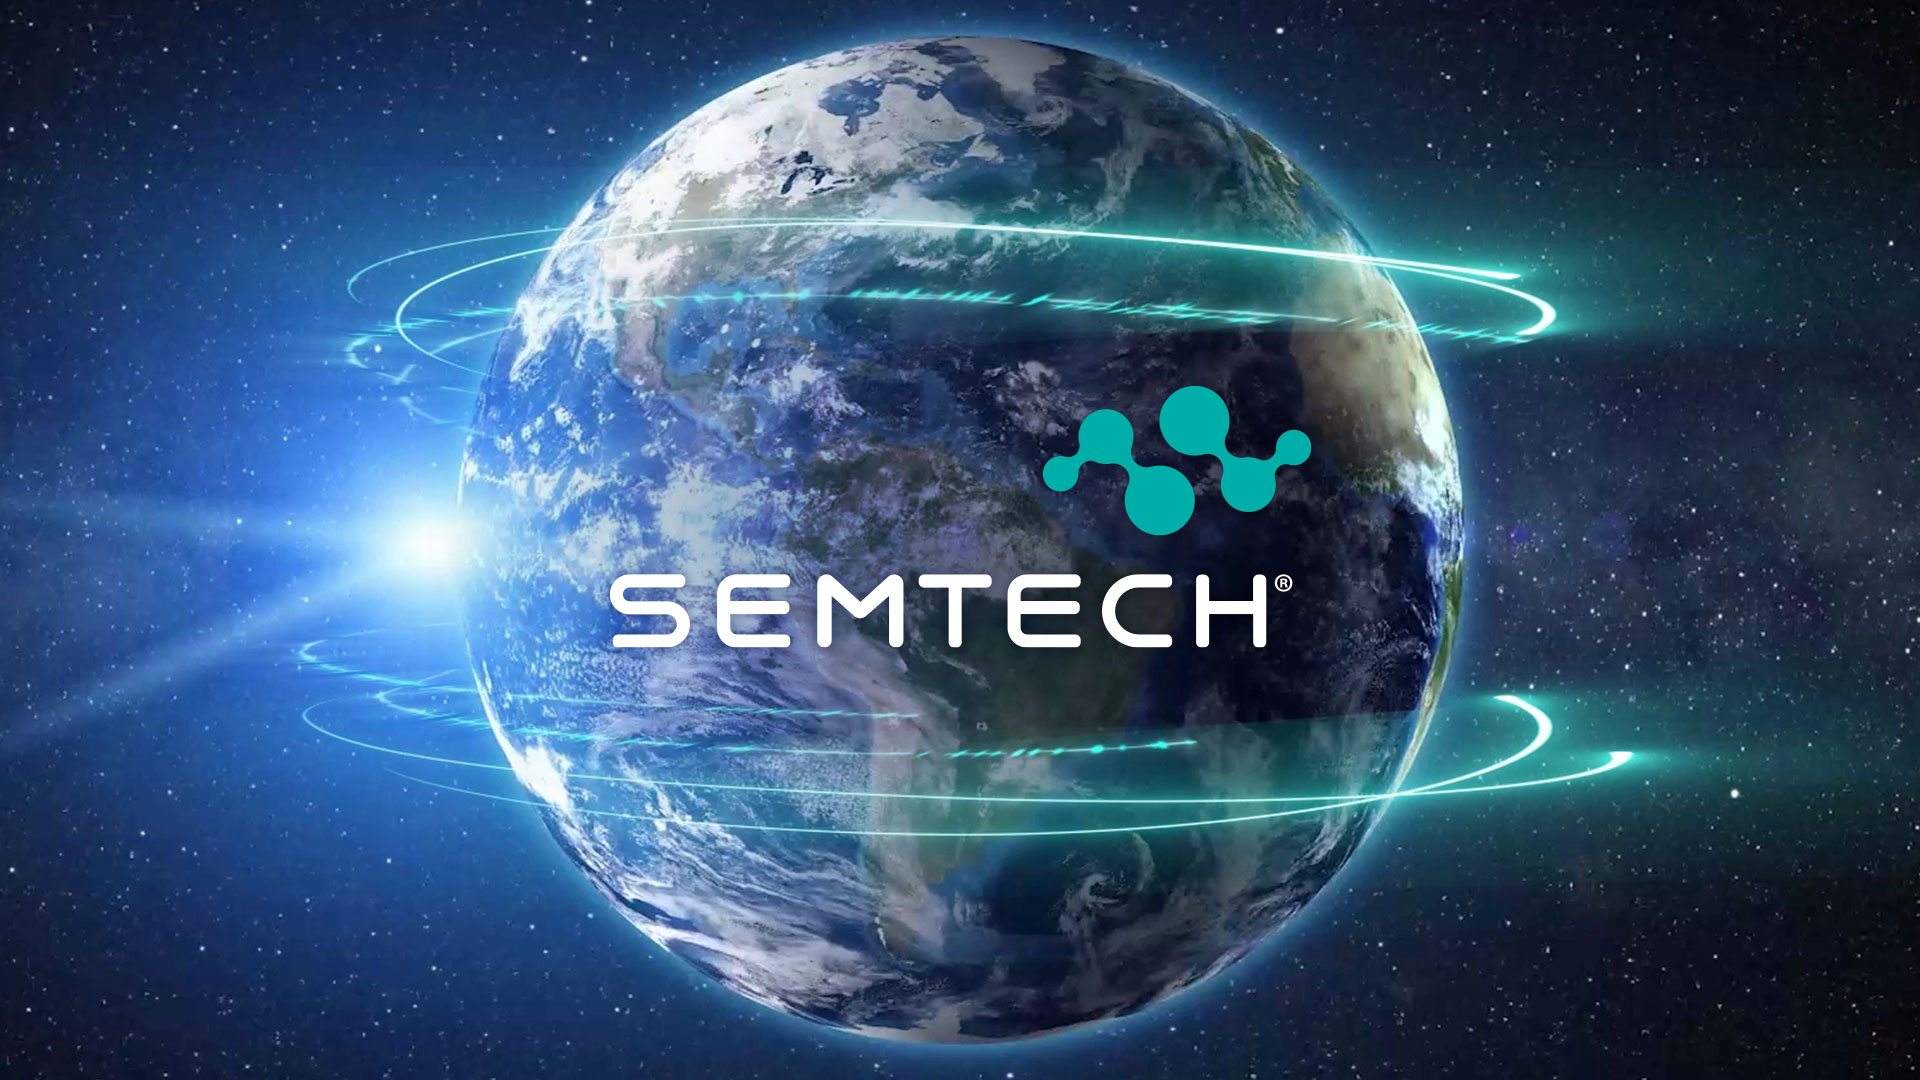 Semtech Rebranding and New Corporate Identity - NYX Awards Winner 